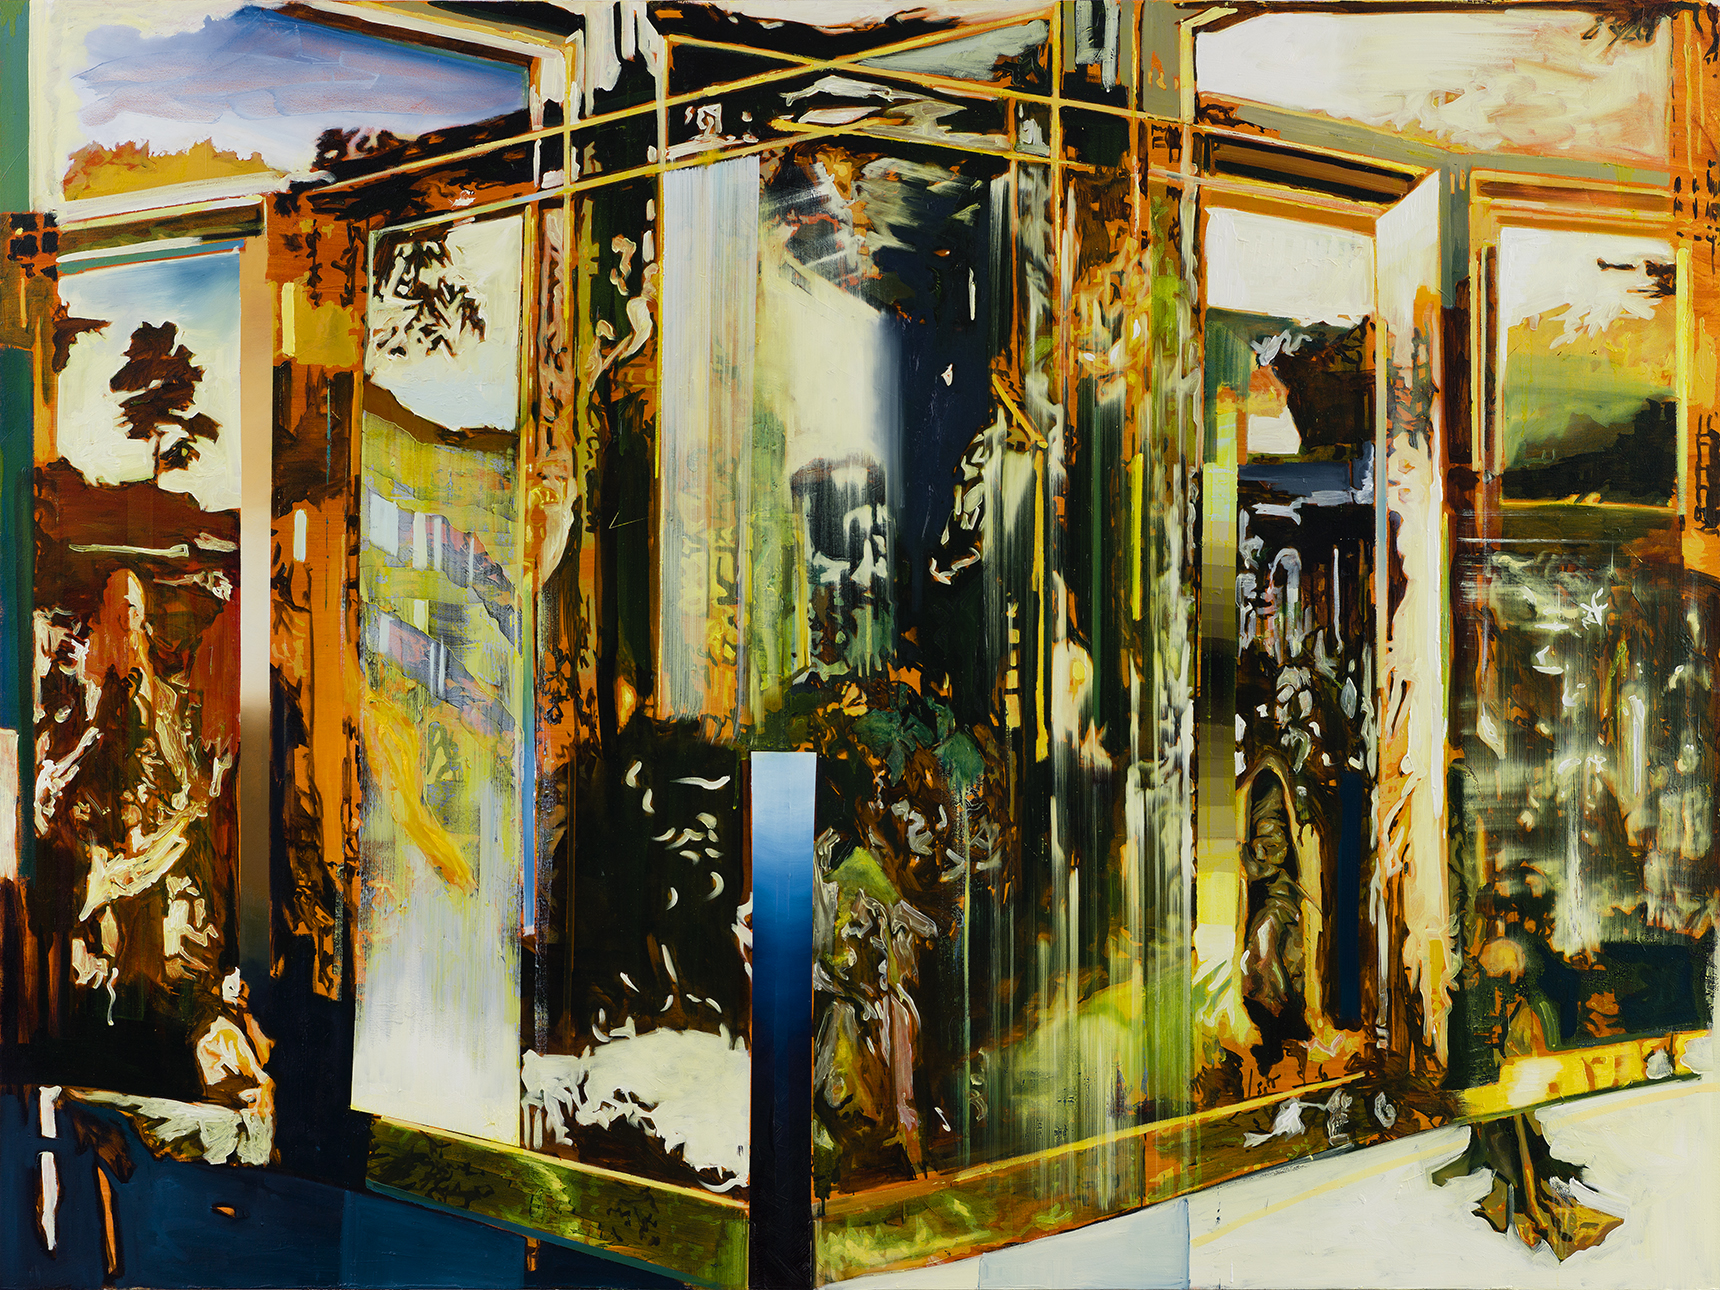 Oren Eliav, Transfiguration, 2014, oil on canvas, 160 x 215 cm